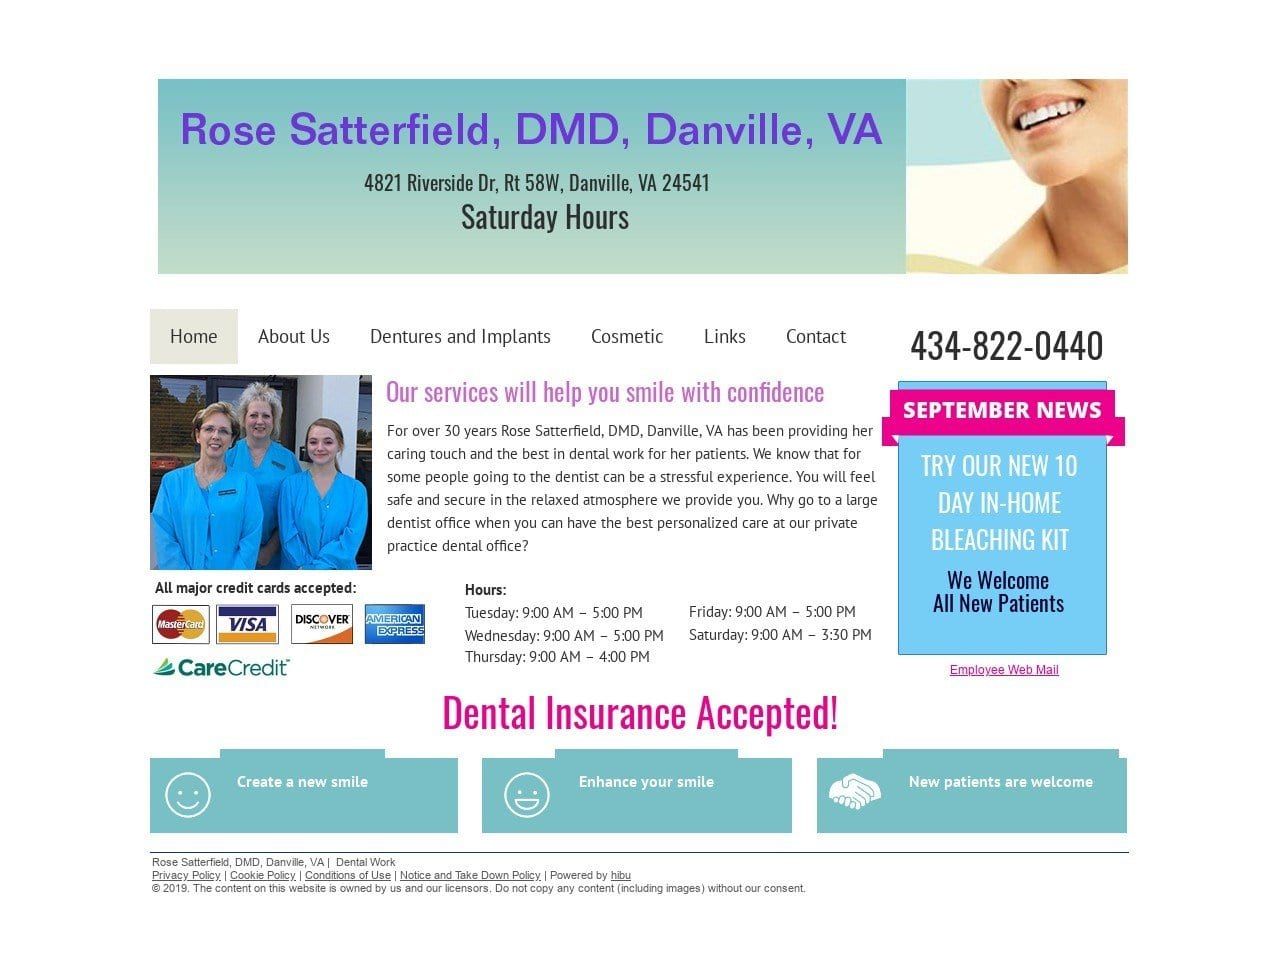 Rose Satterfield DMD PLLC Website Screenshot from satterfielddental.com